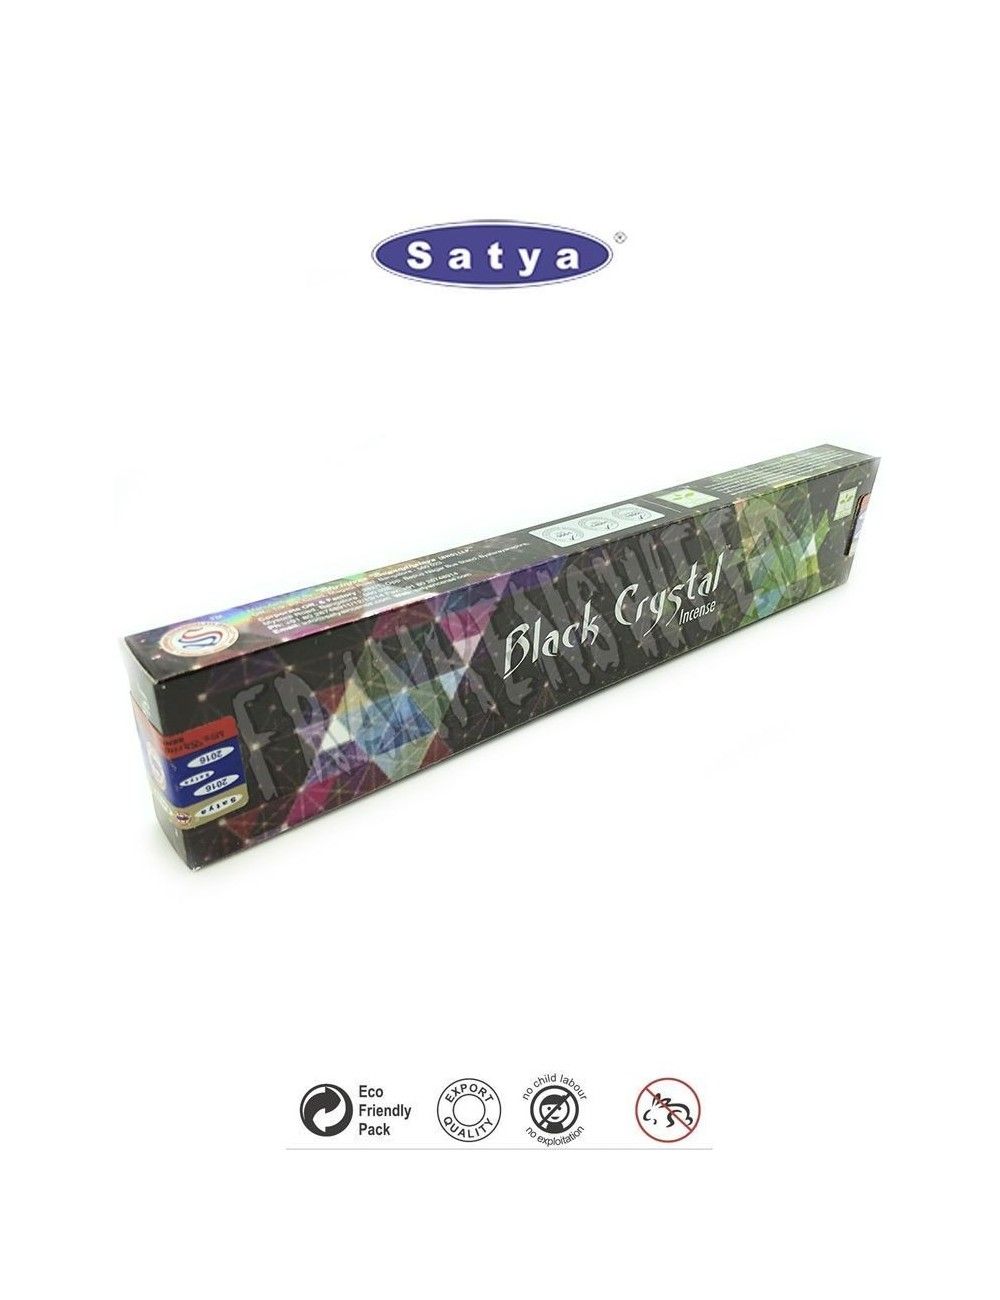 Black Crystal - Satya Sai Baba - Incense Sticks